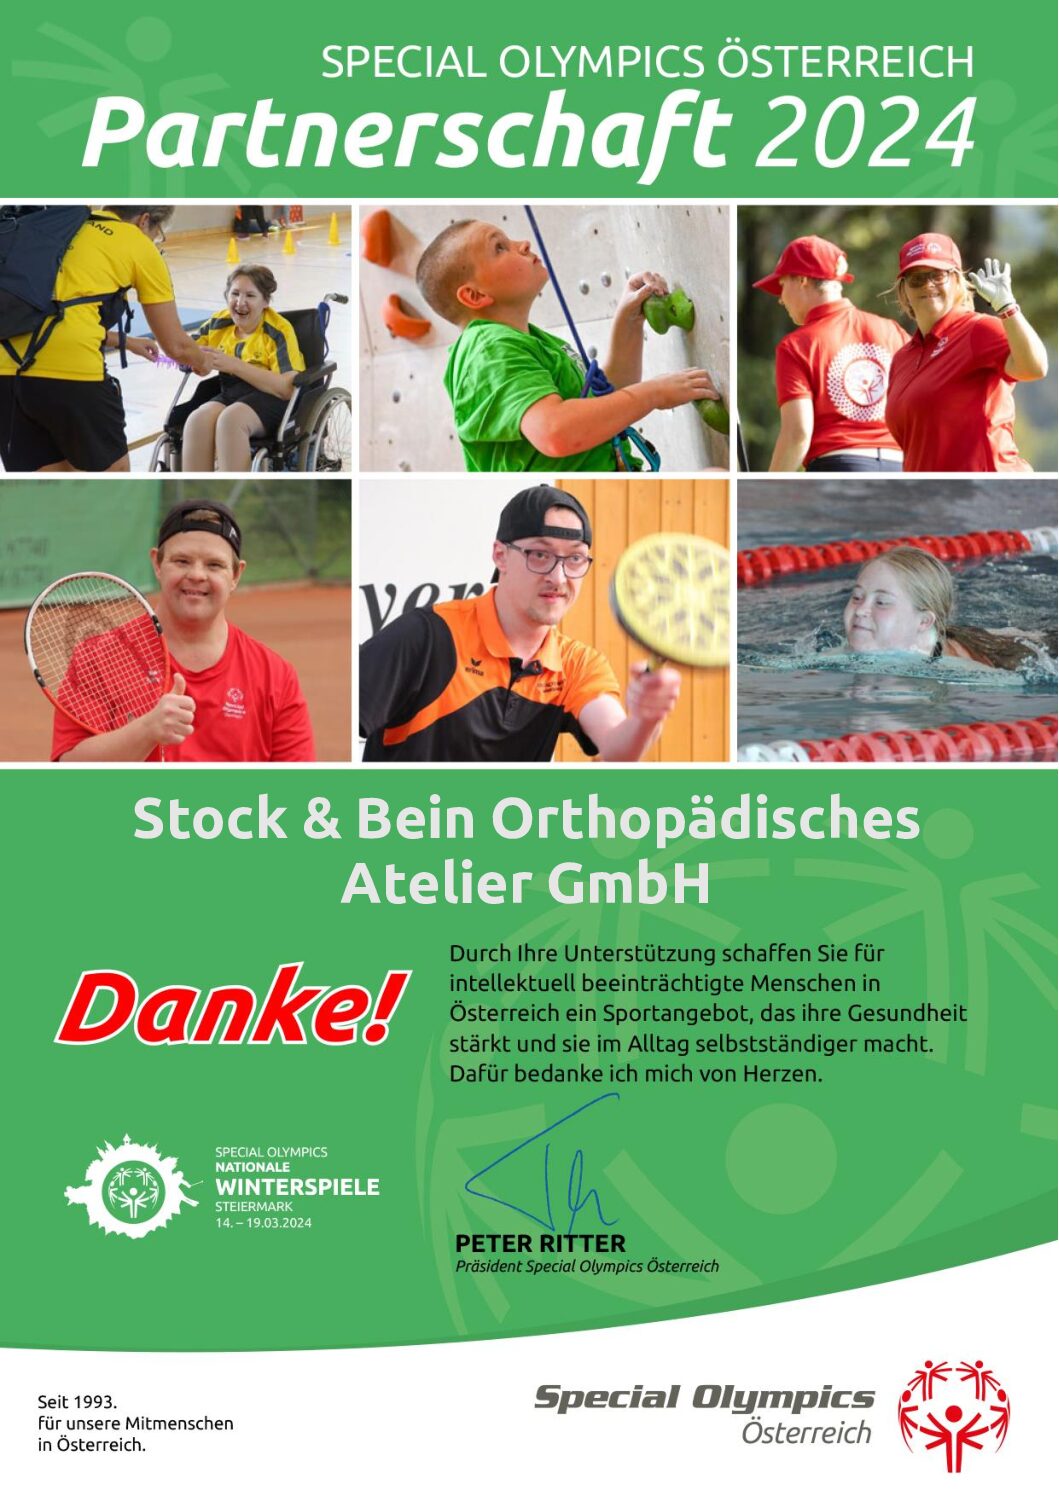 Stock & Bein: offizieller Partner der Special Olympics 2024